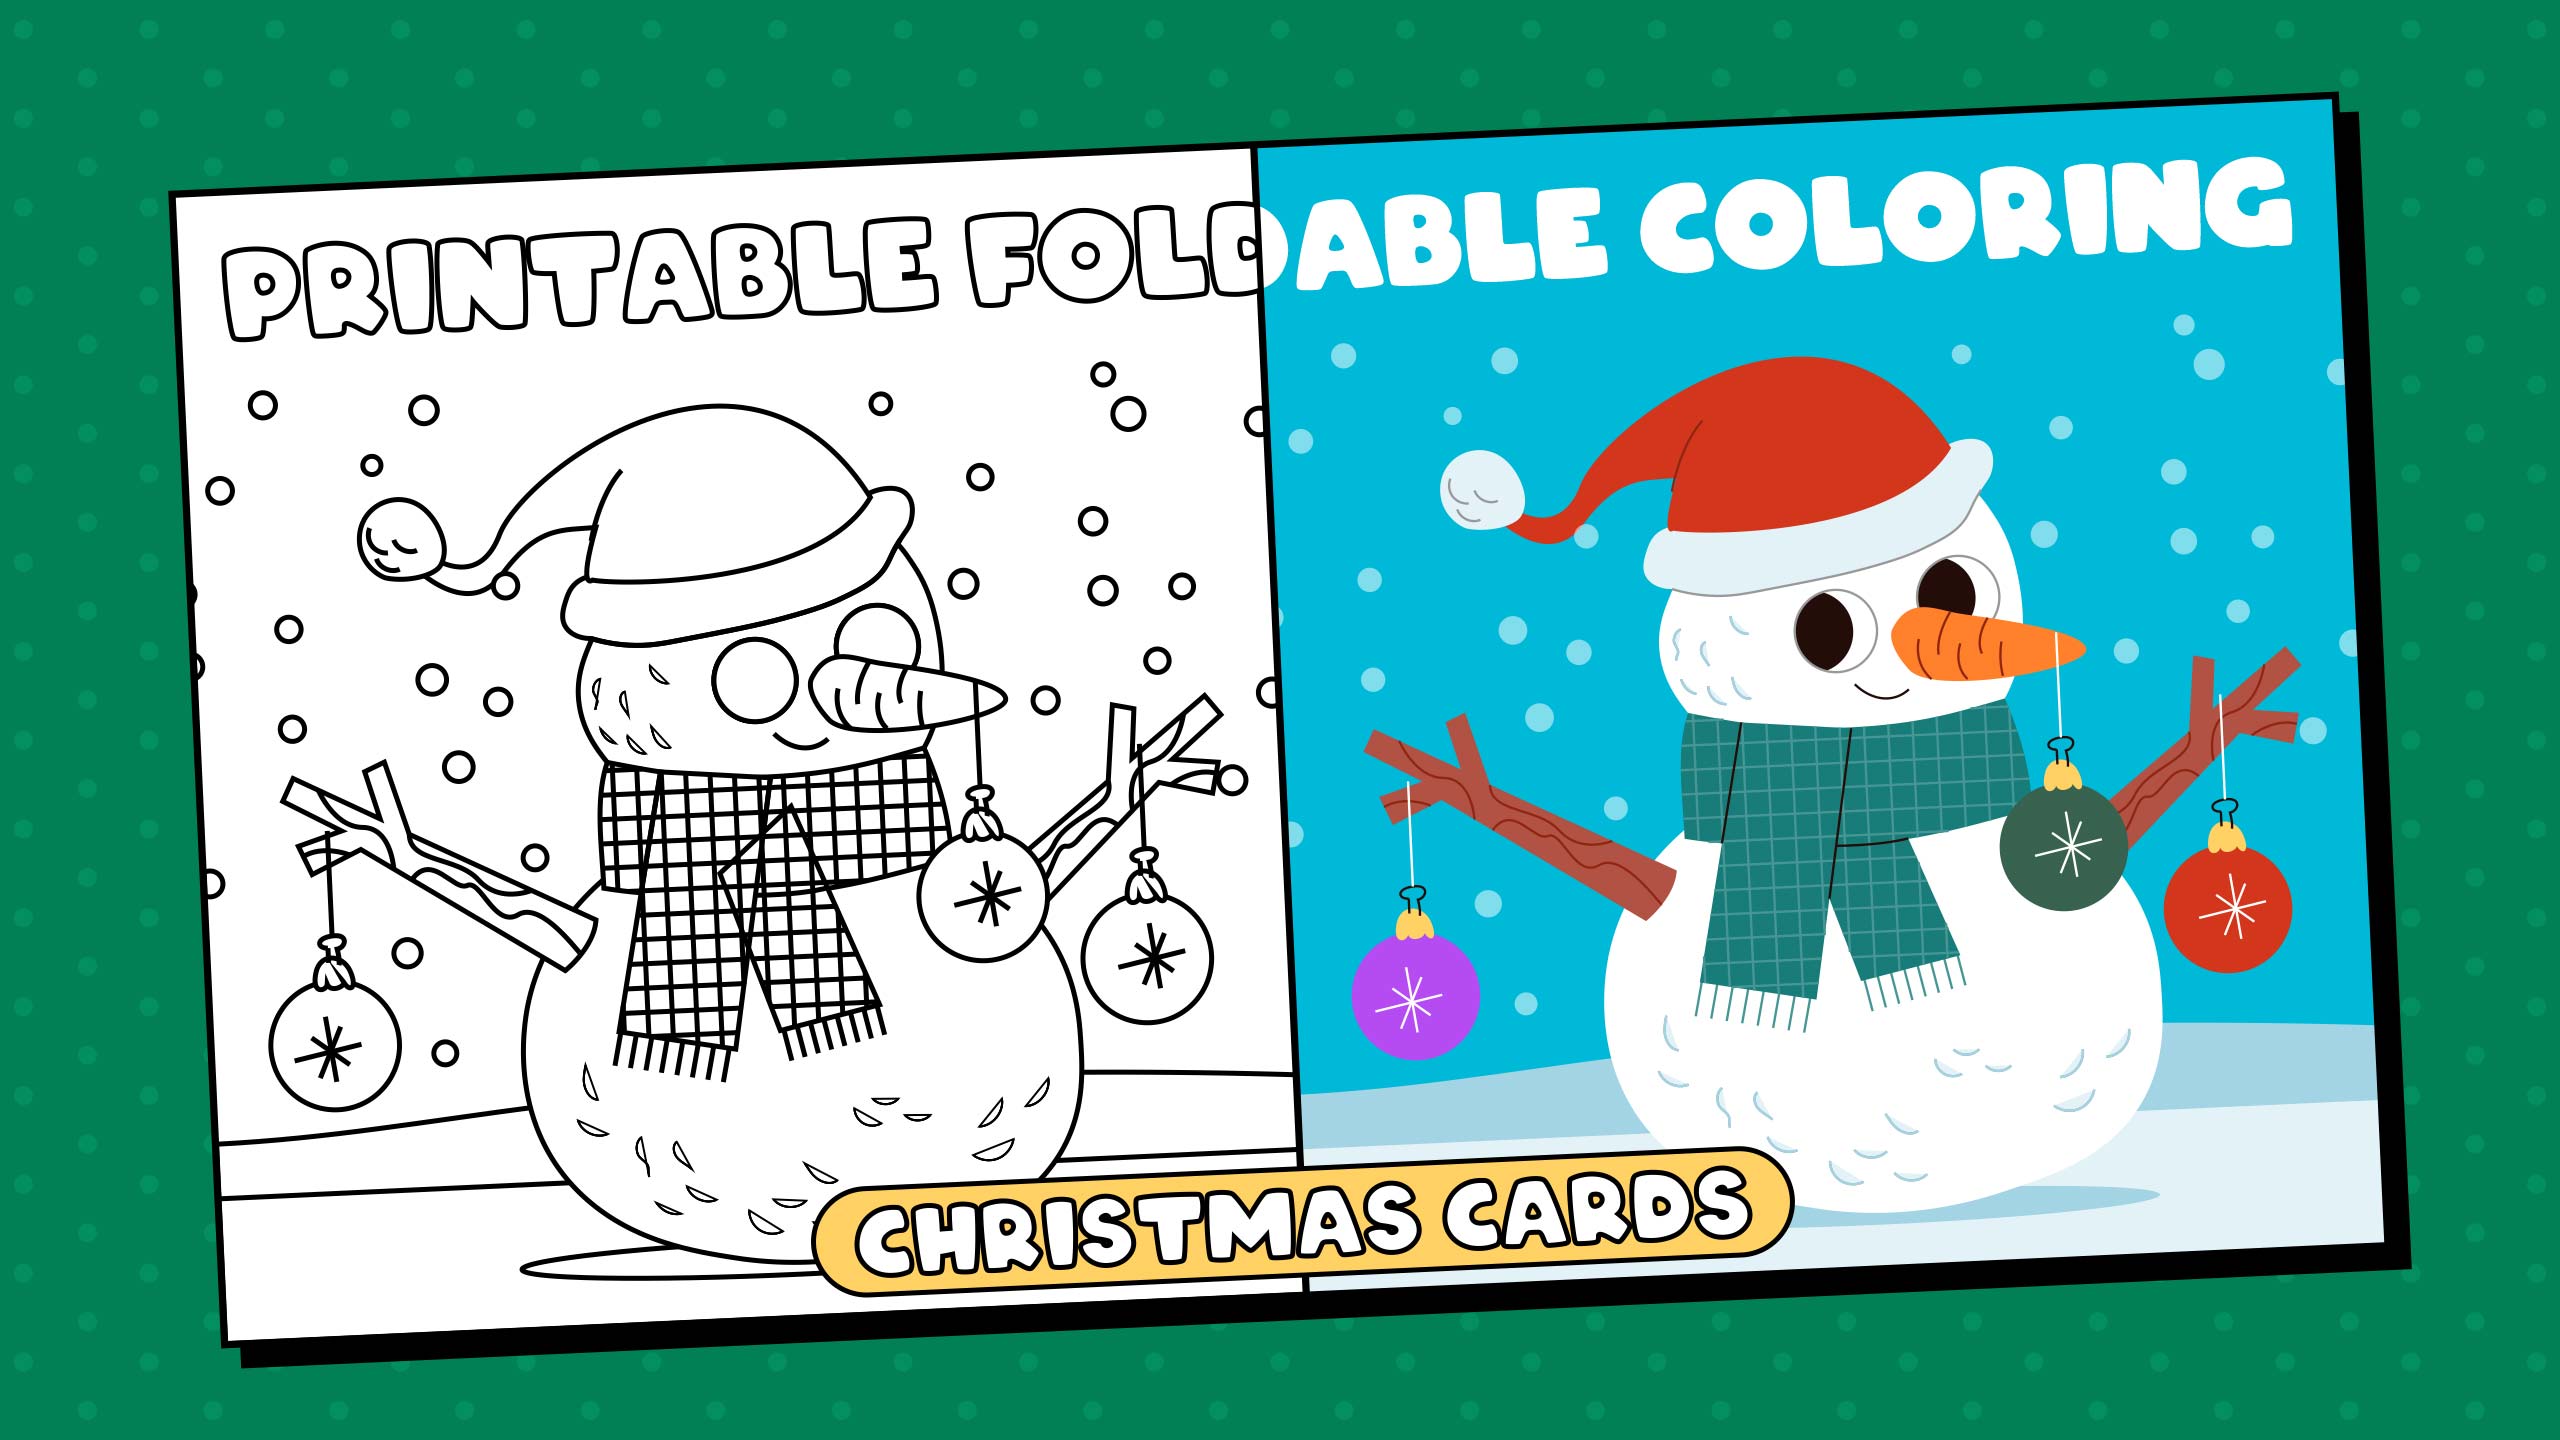 Printable Foldable Coloring Christmas Cards